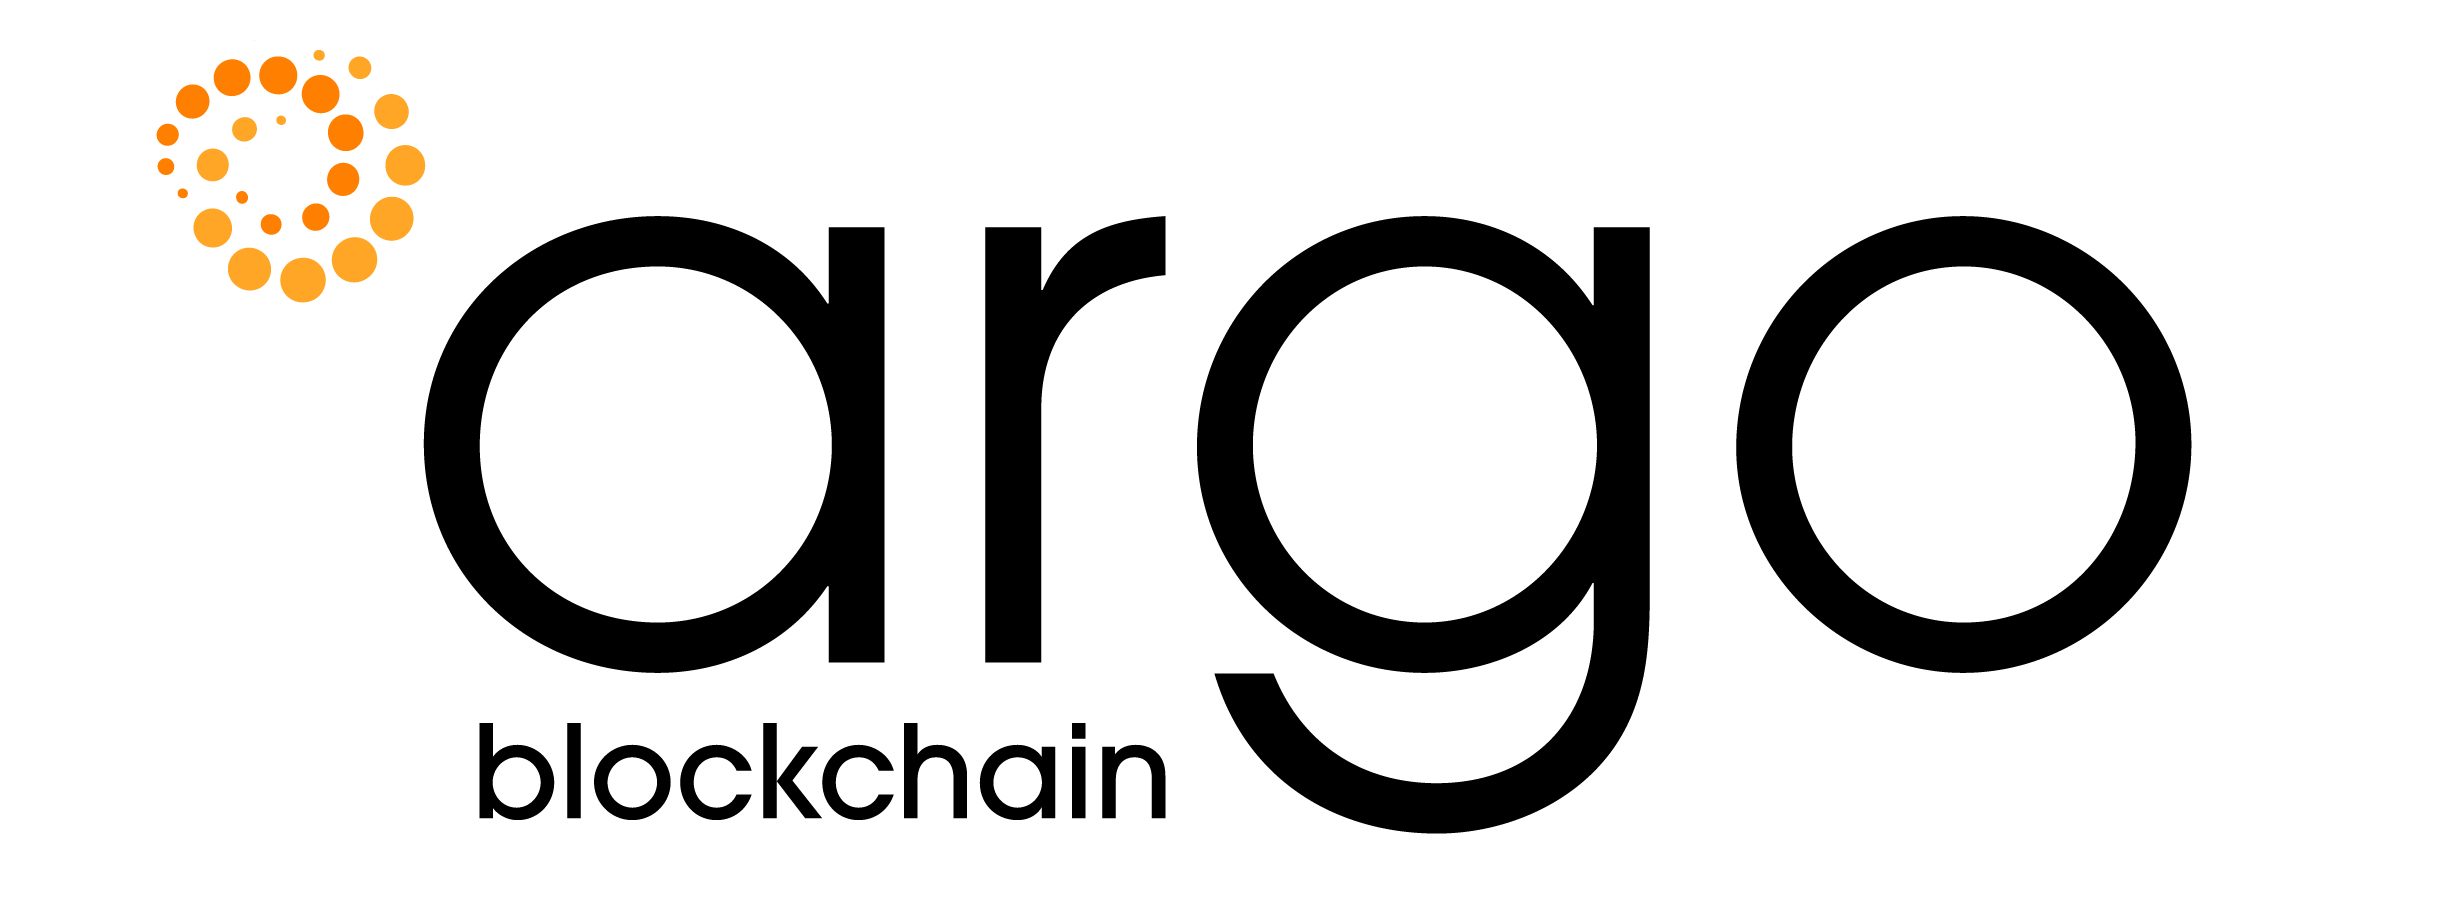 آرگو Argo انرژی پاک تجدیدپذیر استخراج بیت کوین